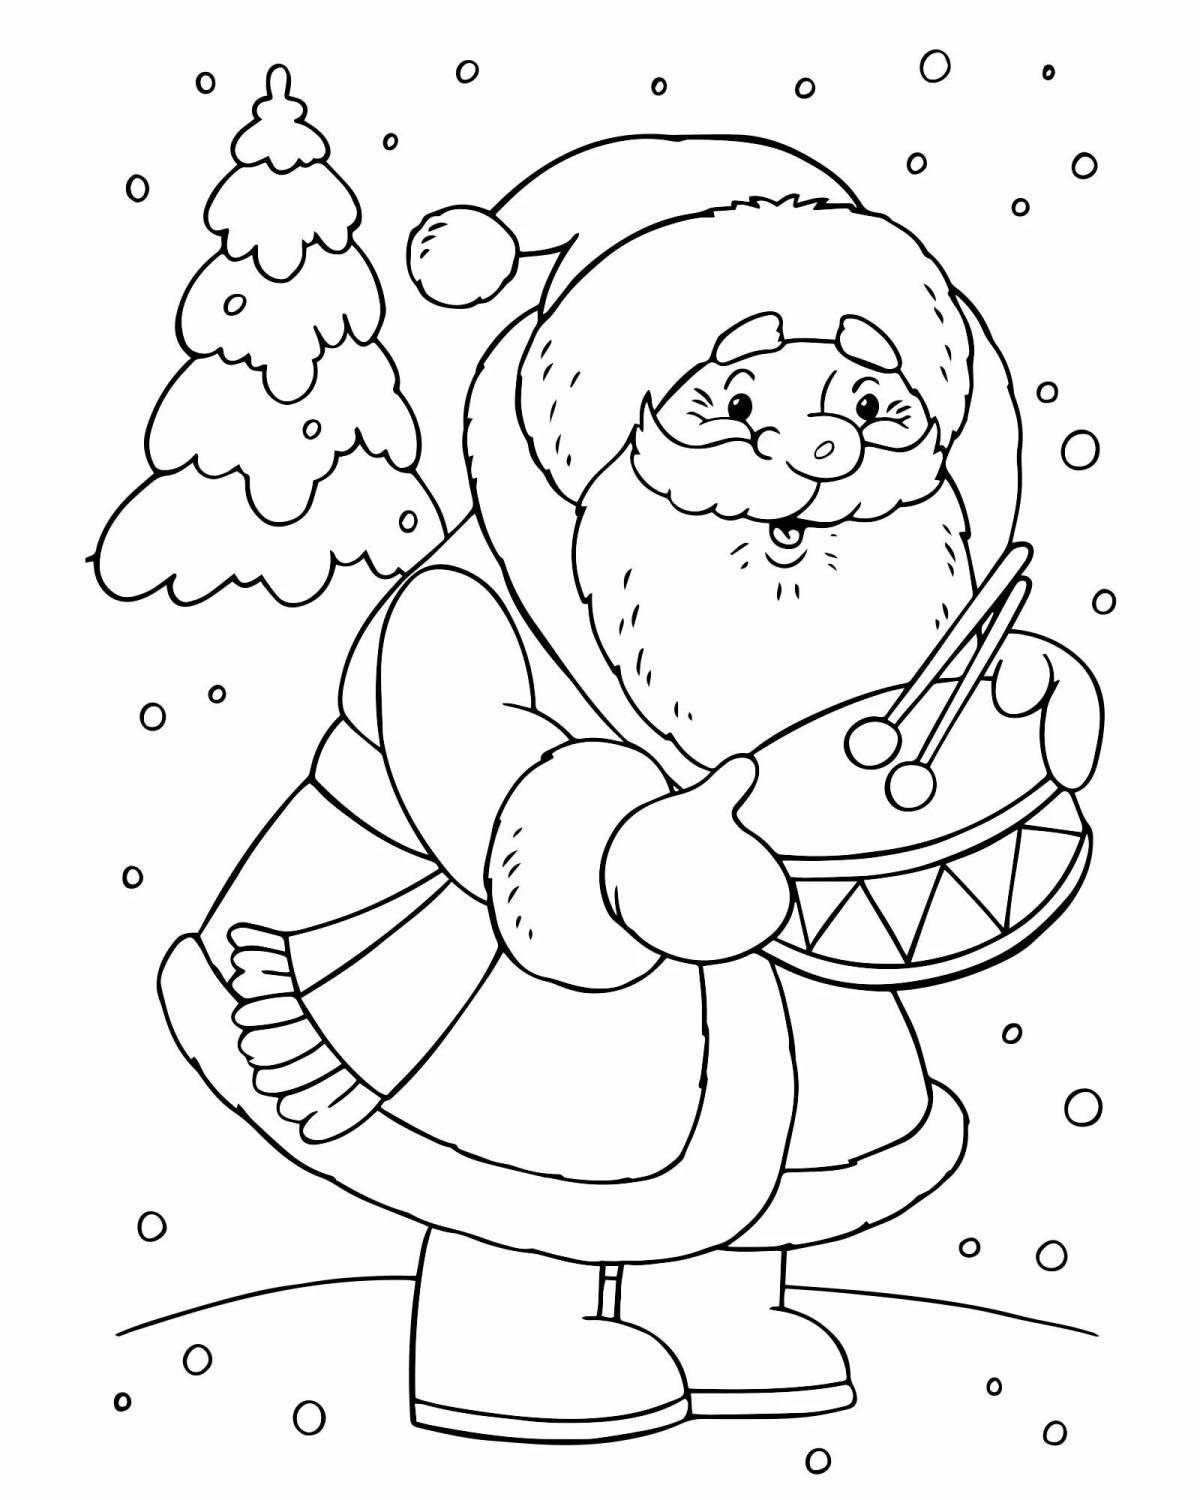 Santa claus funny coloring book for kids